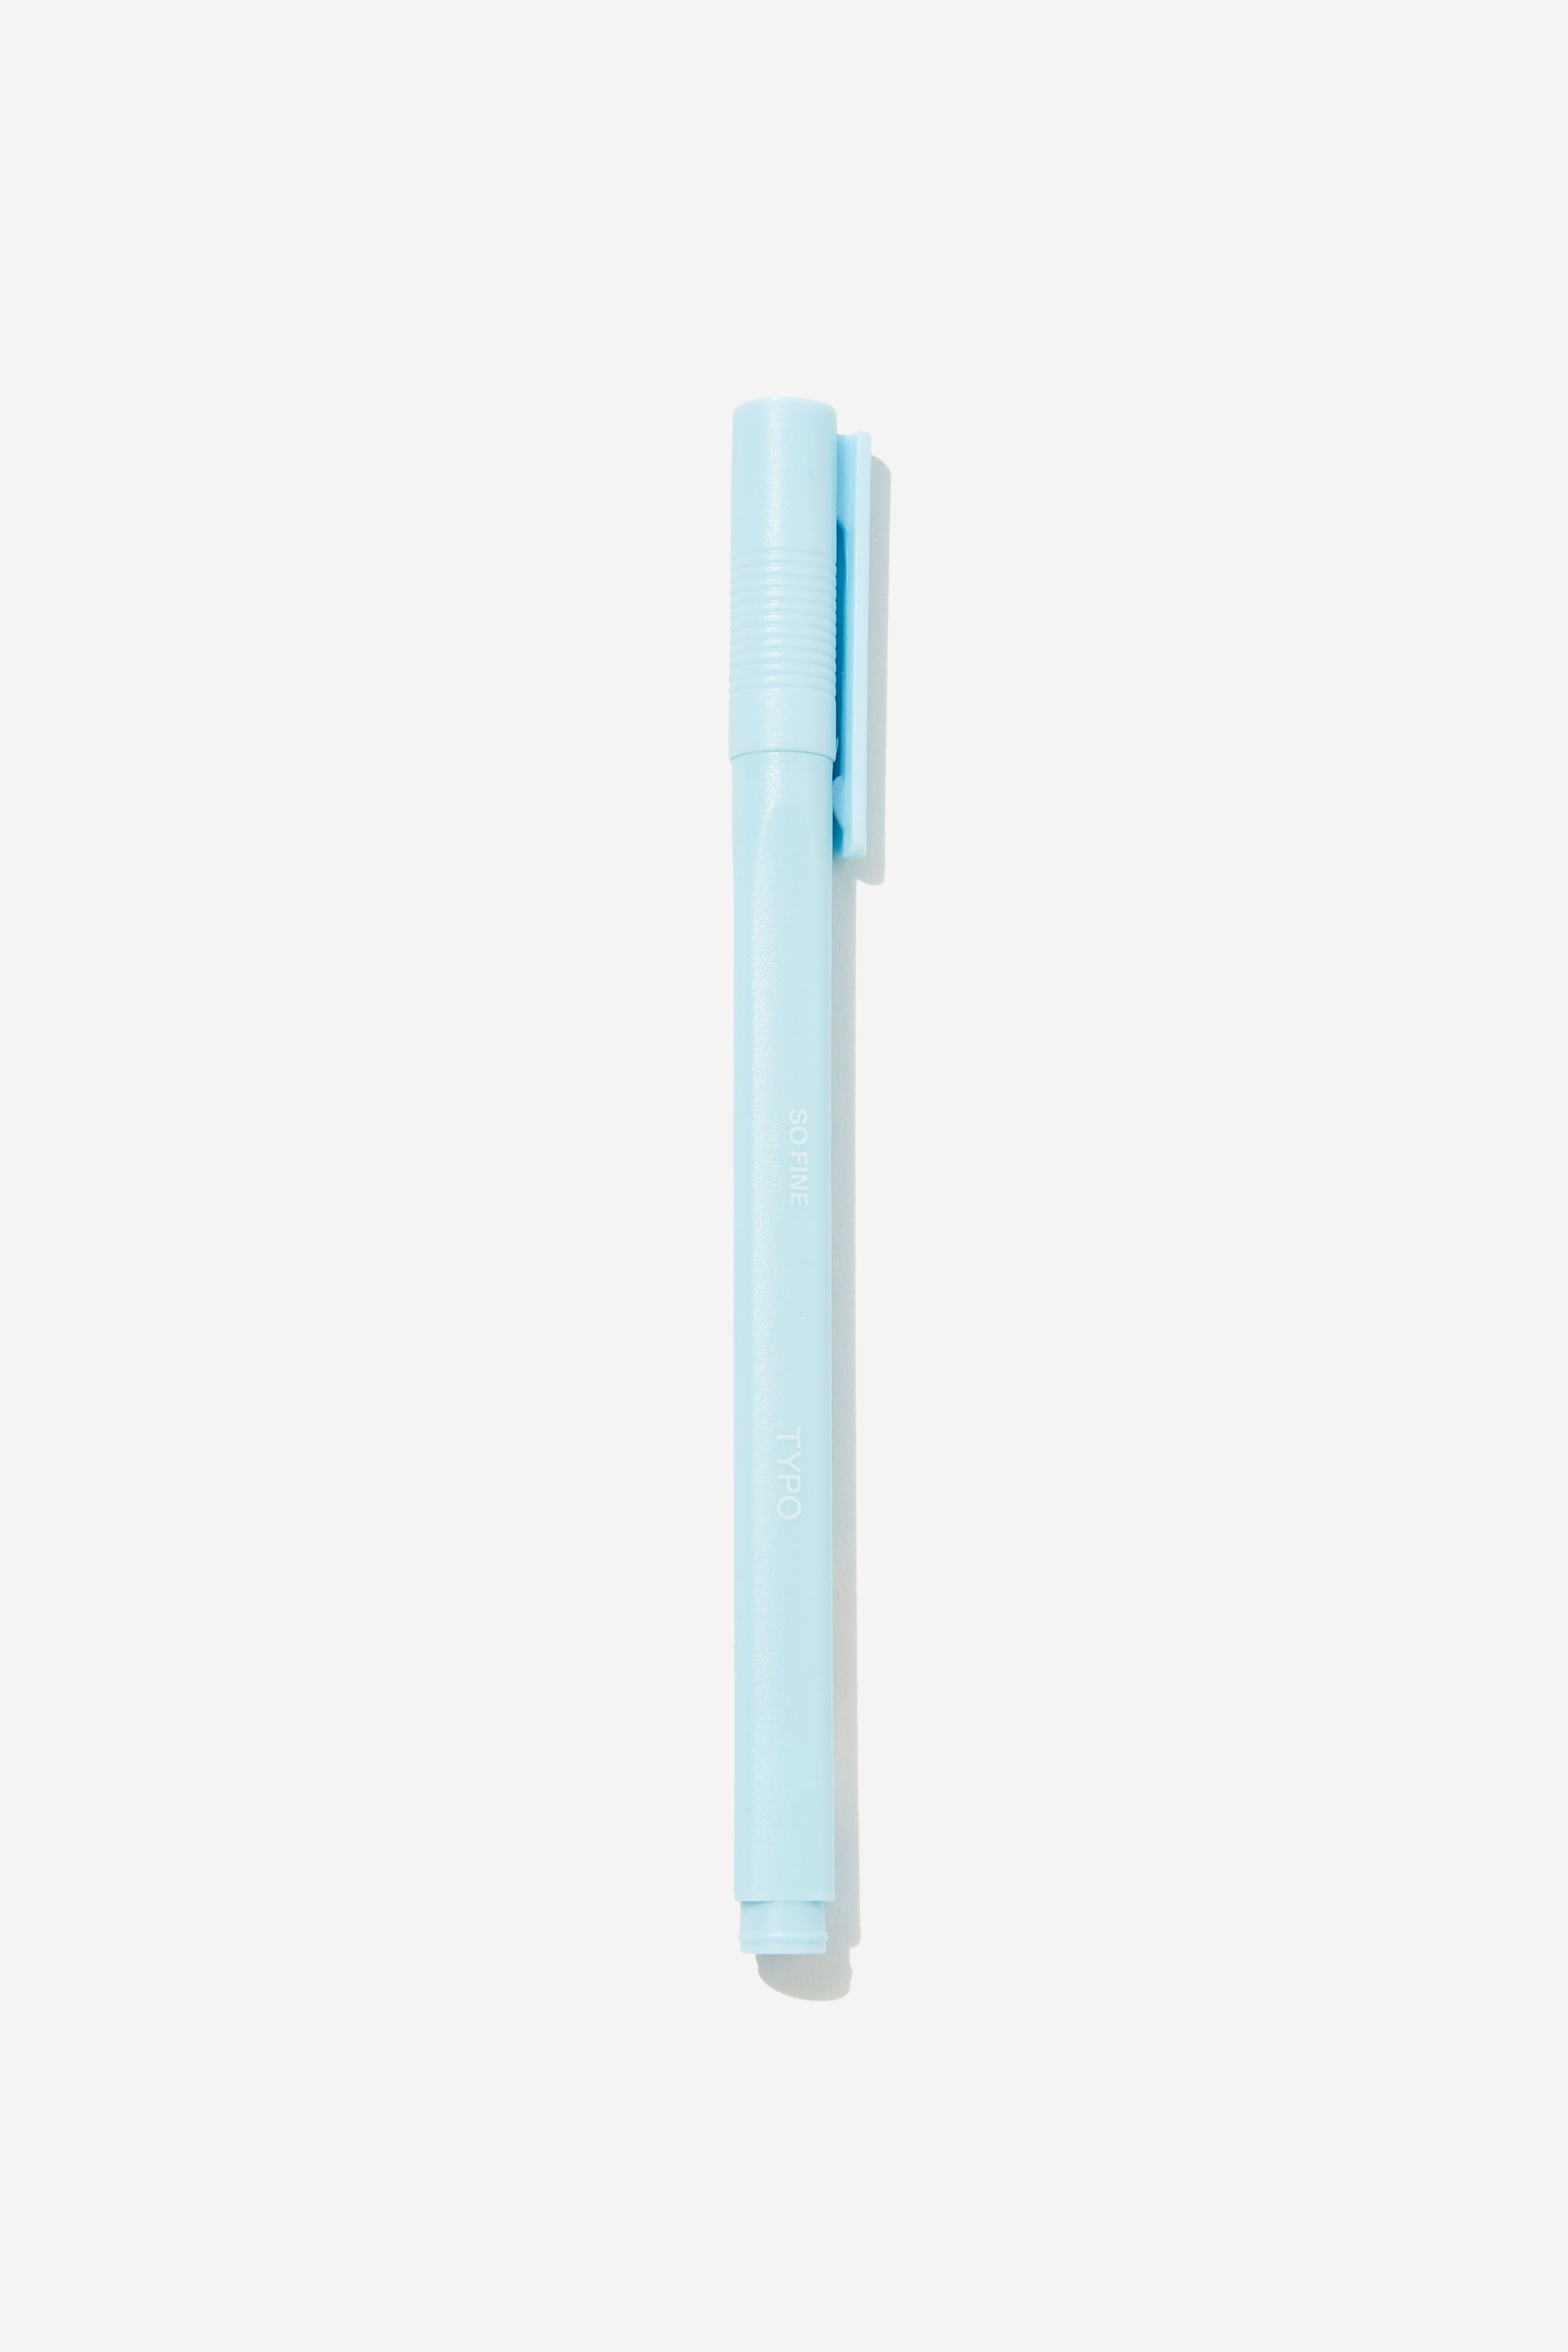 Typo - So Fine Fineliner Pen - Arctic blue